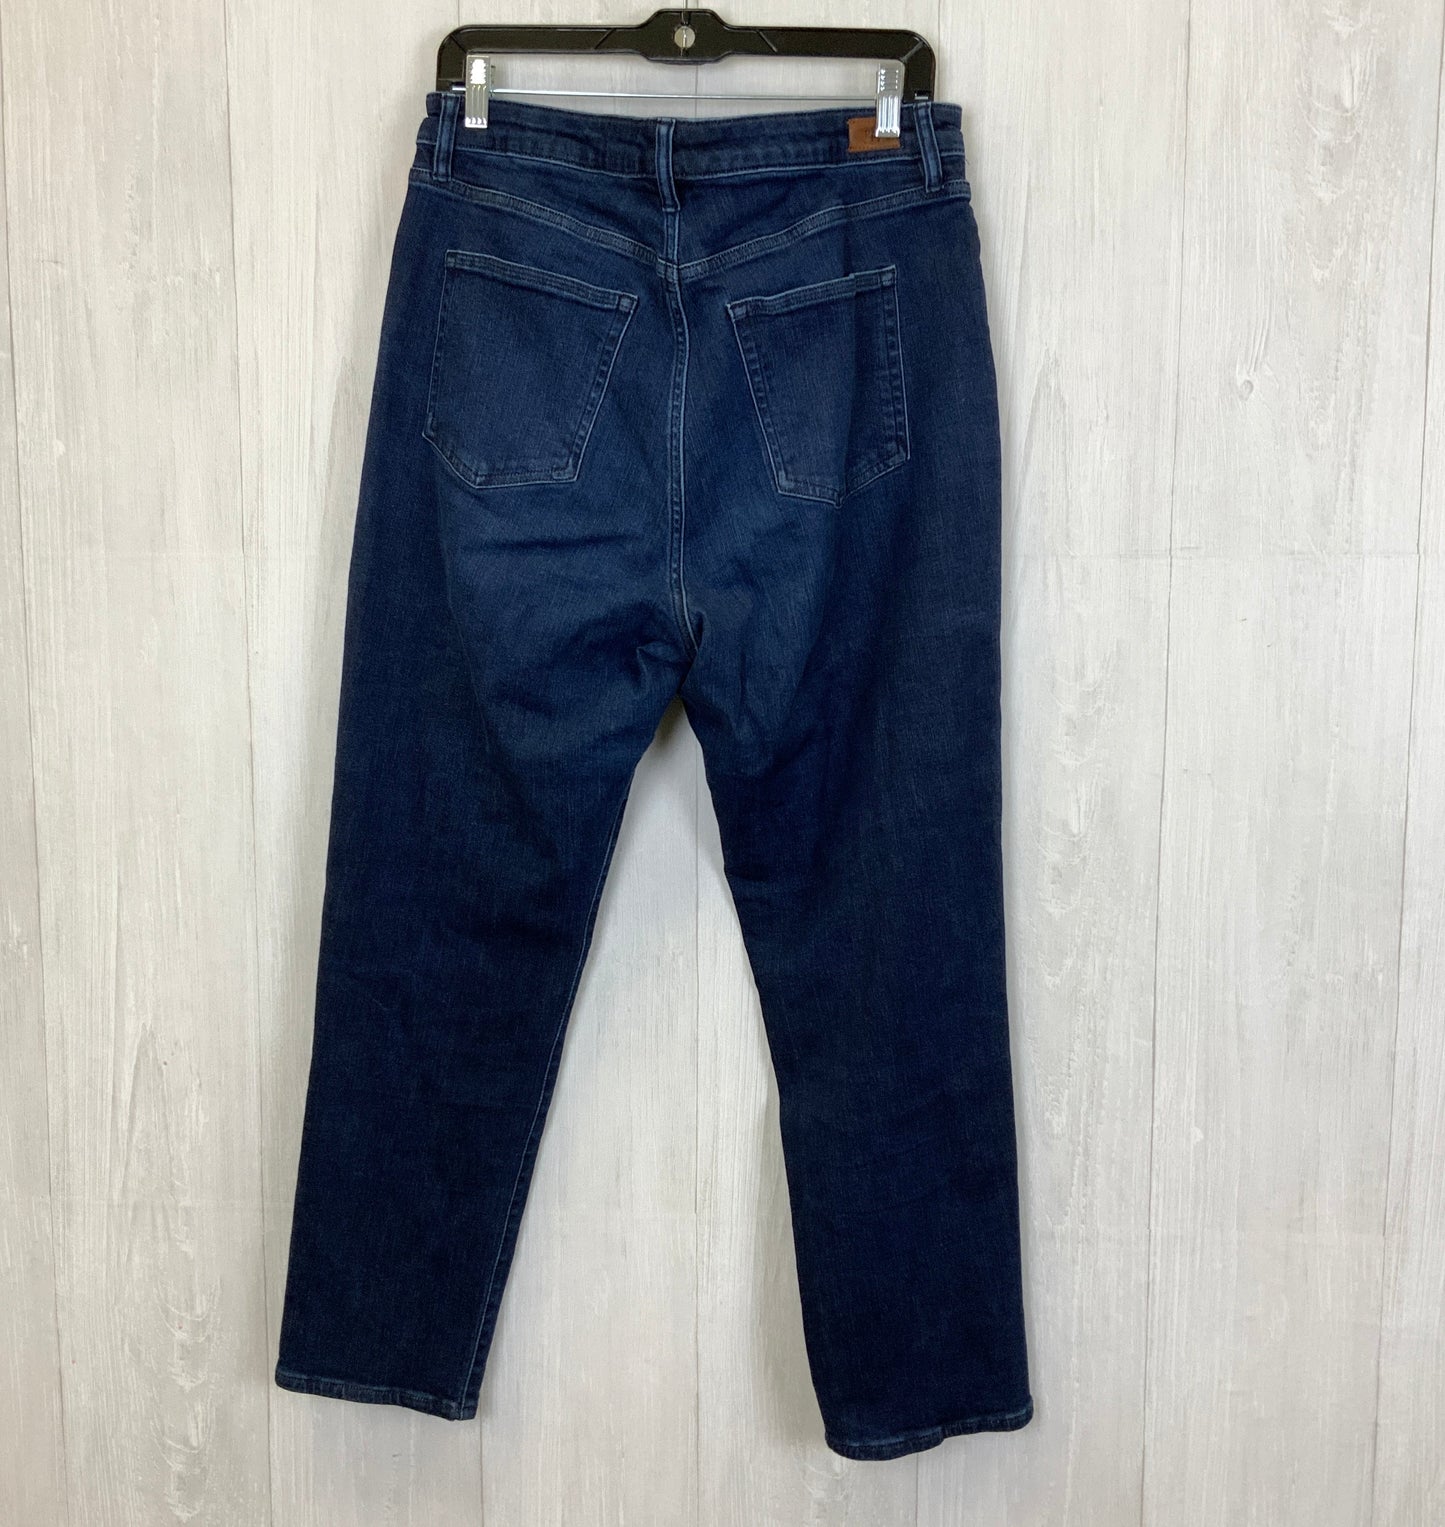 Jeans Straight By Lauren By Ralph Lauren  Size: 16